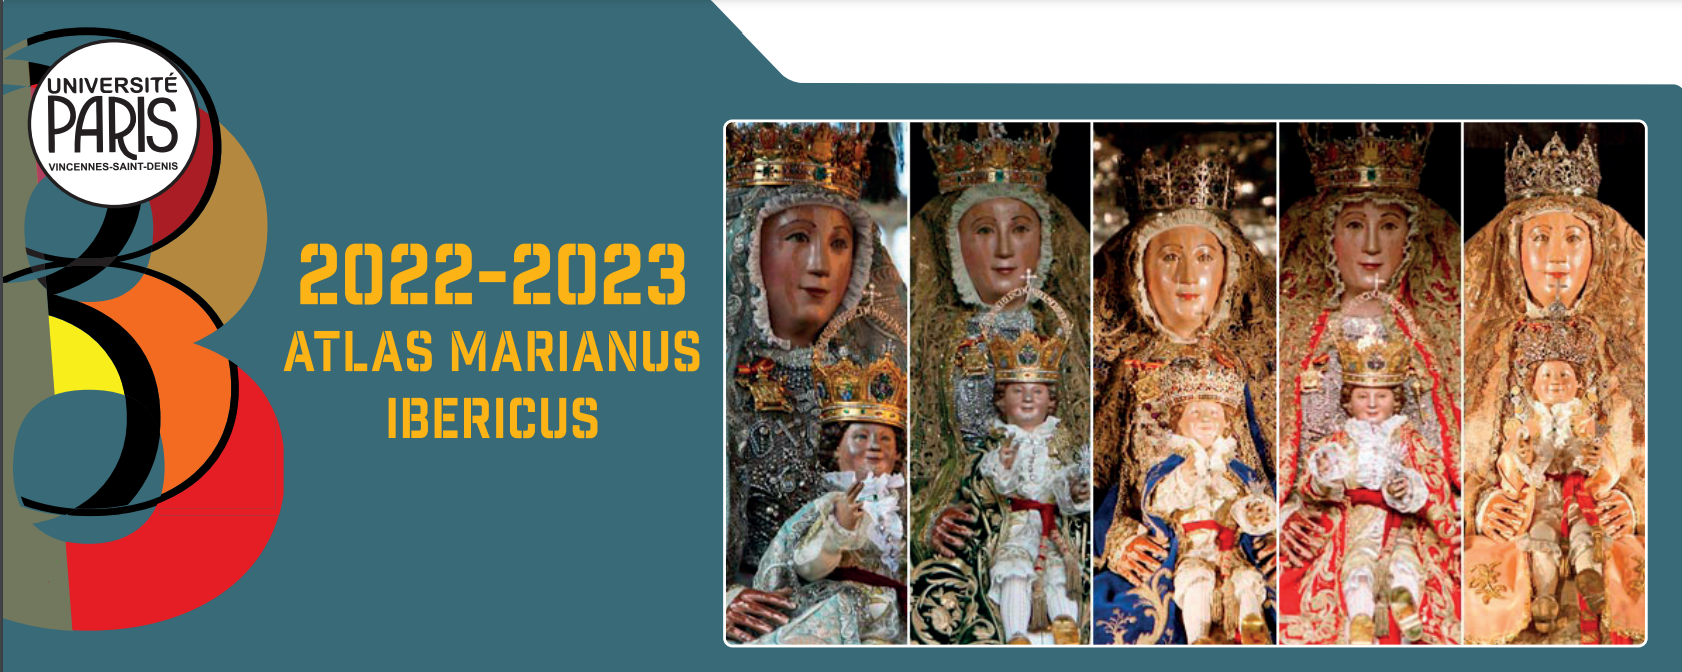 Illustration Atlas Marianus Ibericus 2022-2023